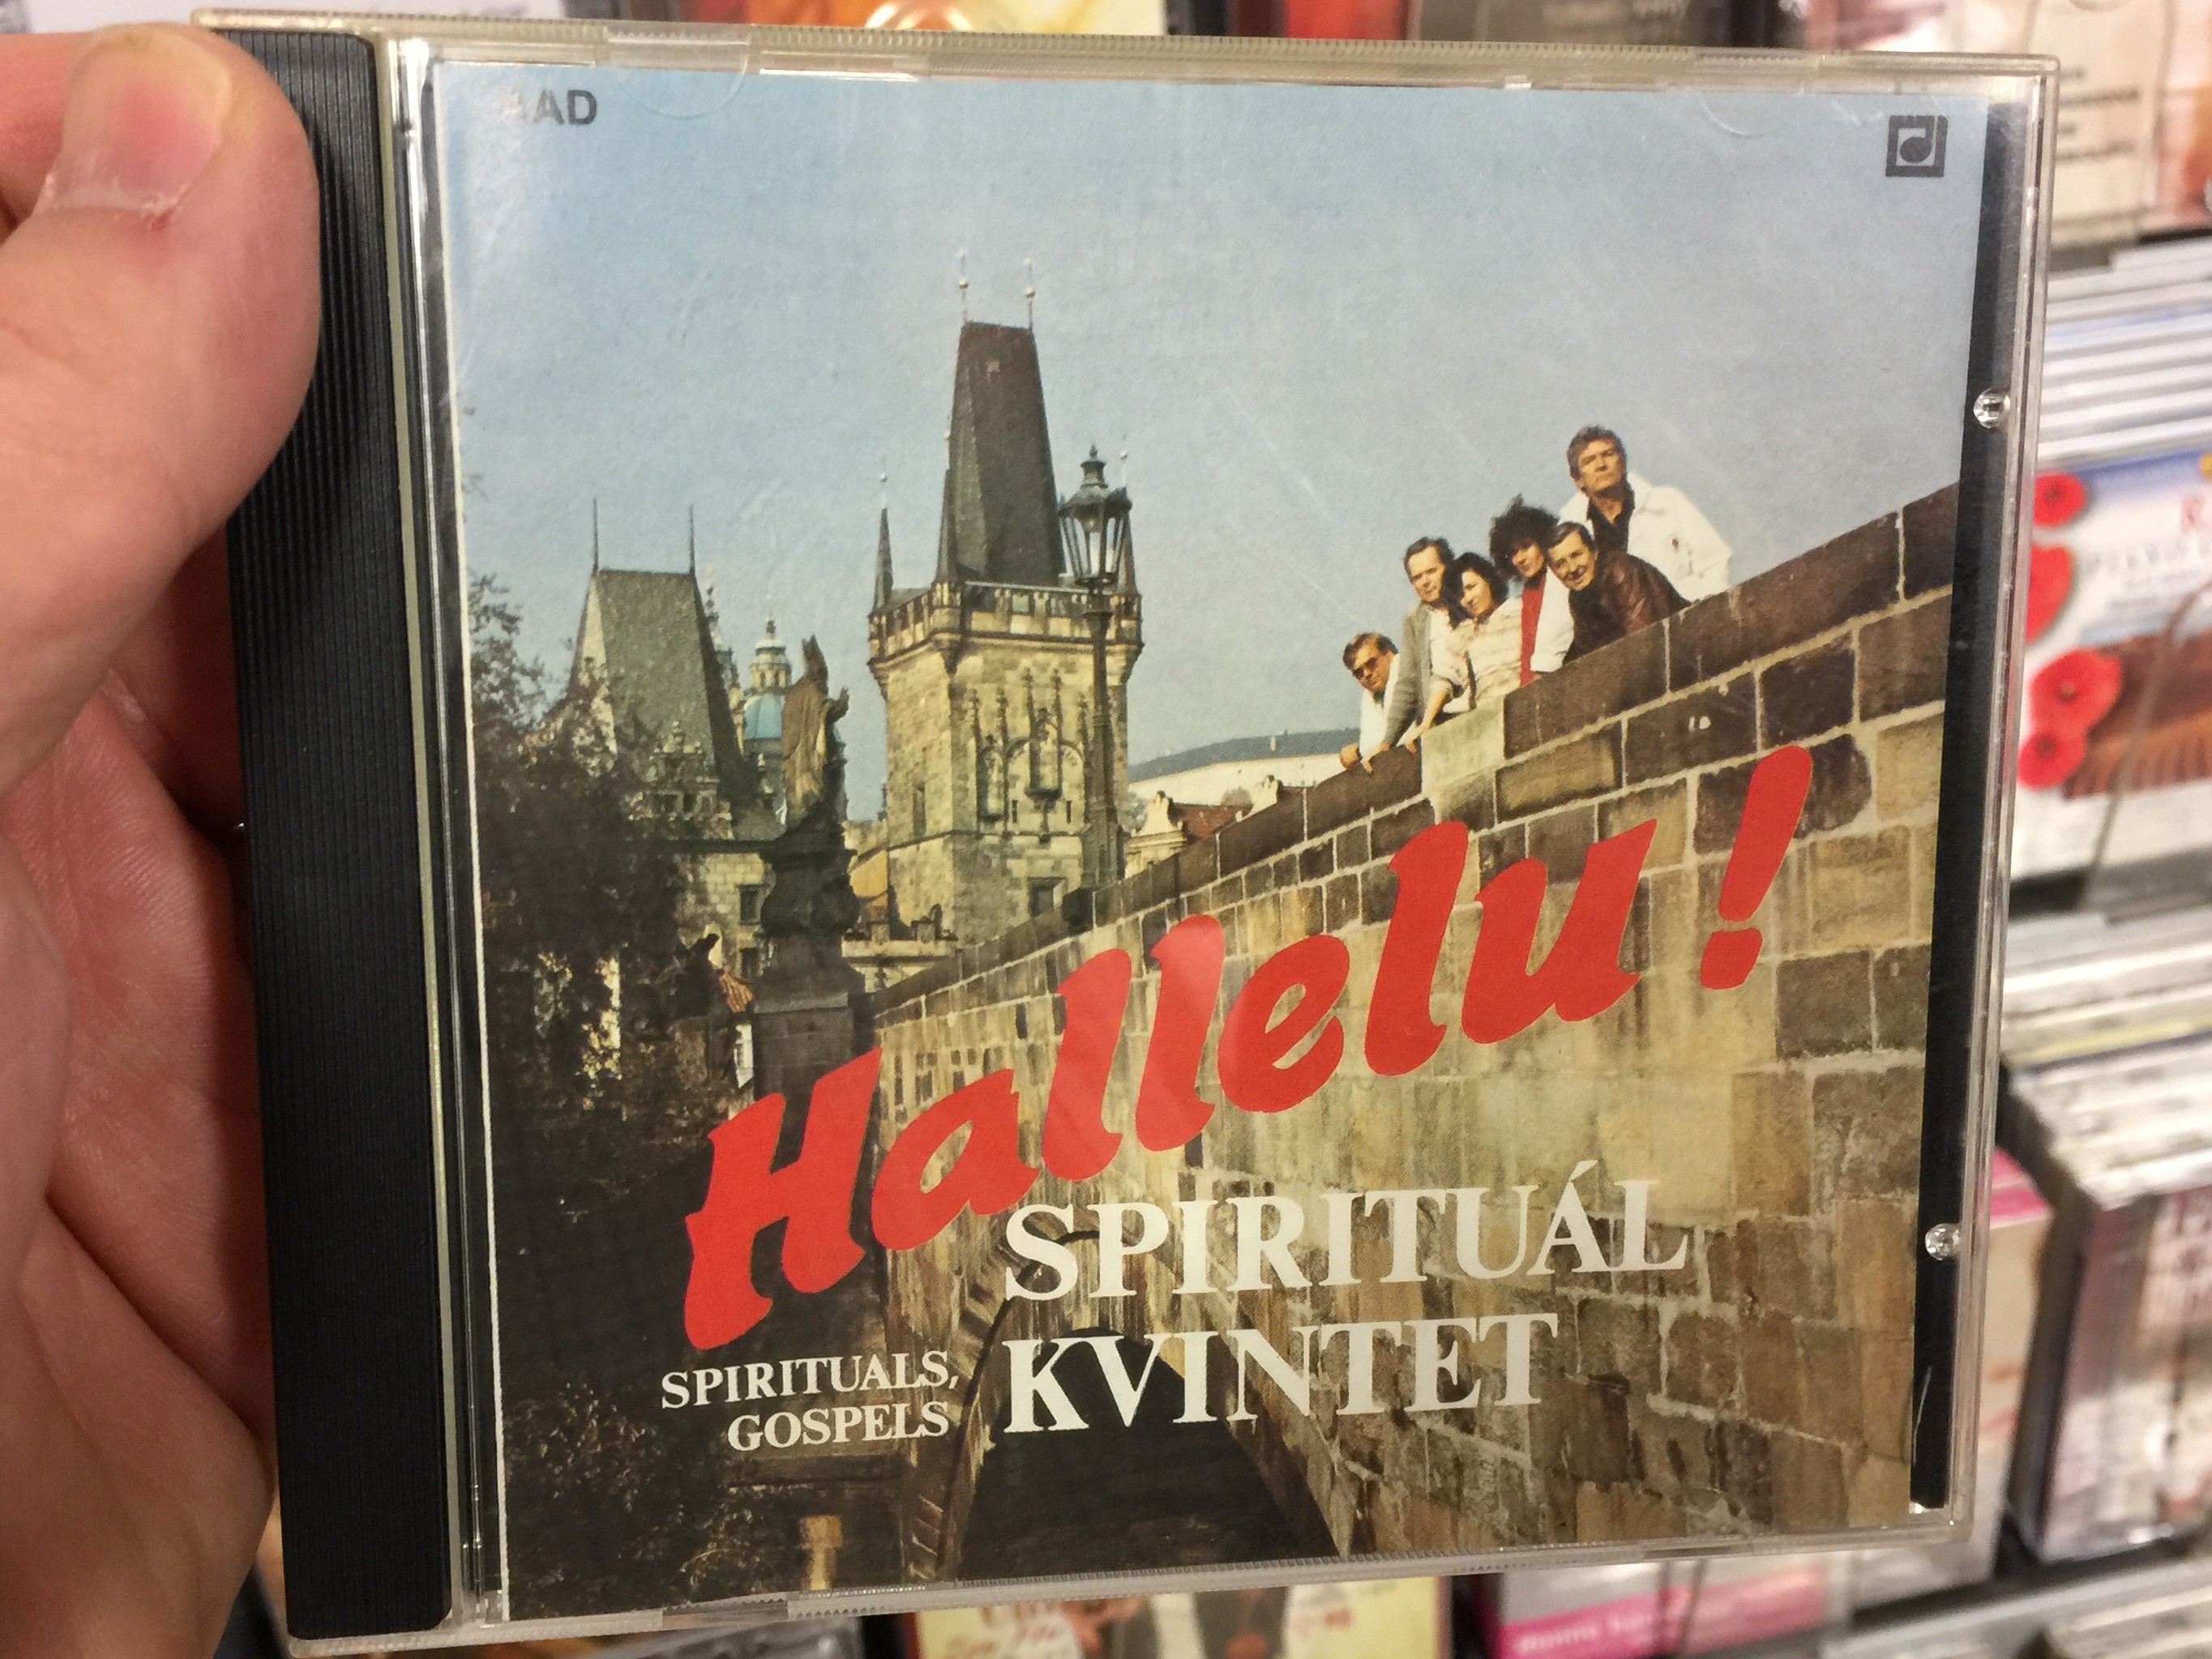 hallelu-spiritu-l-kvintet-spirtuals-gospels-panton-audio-cd-1991-stereo-81-1010-2-311-1-.jpg